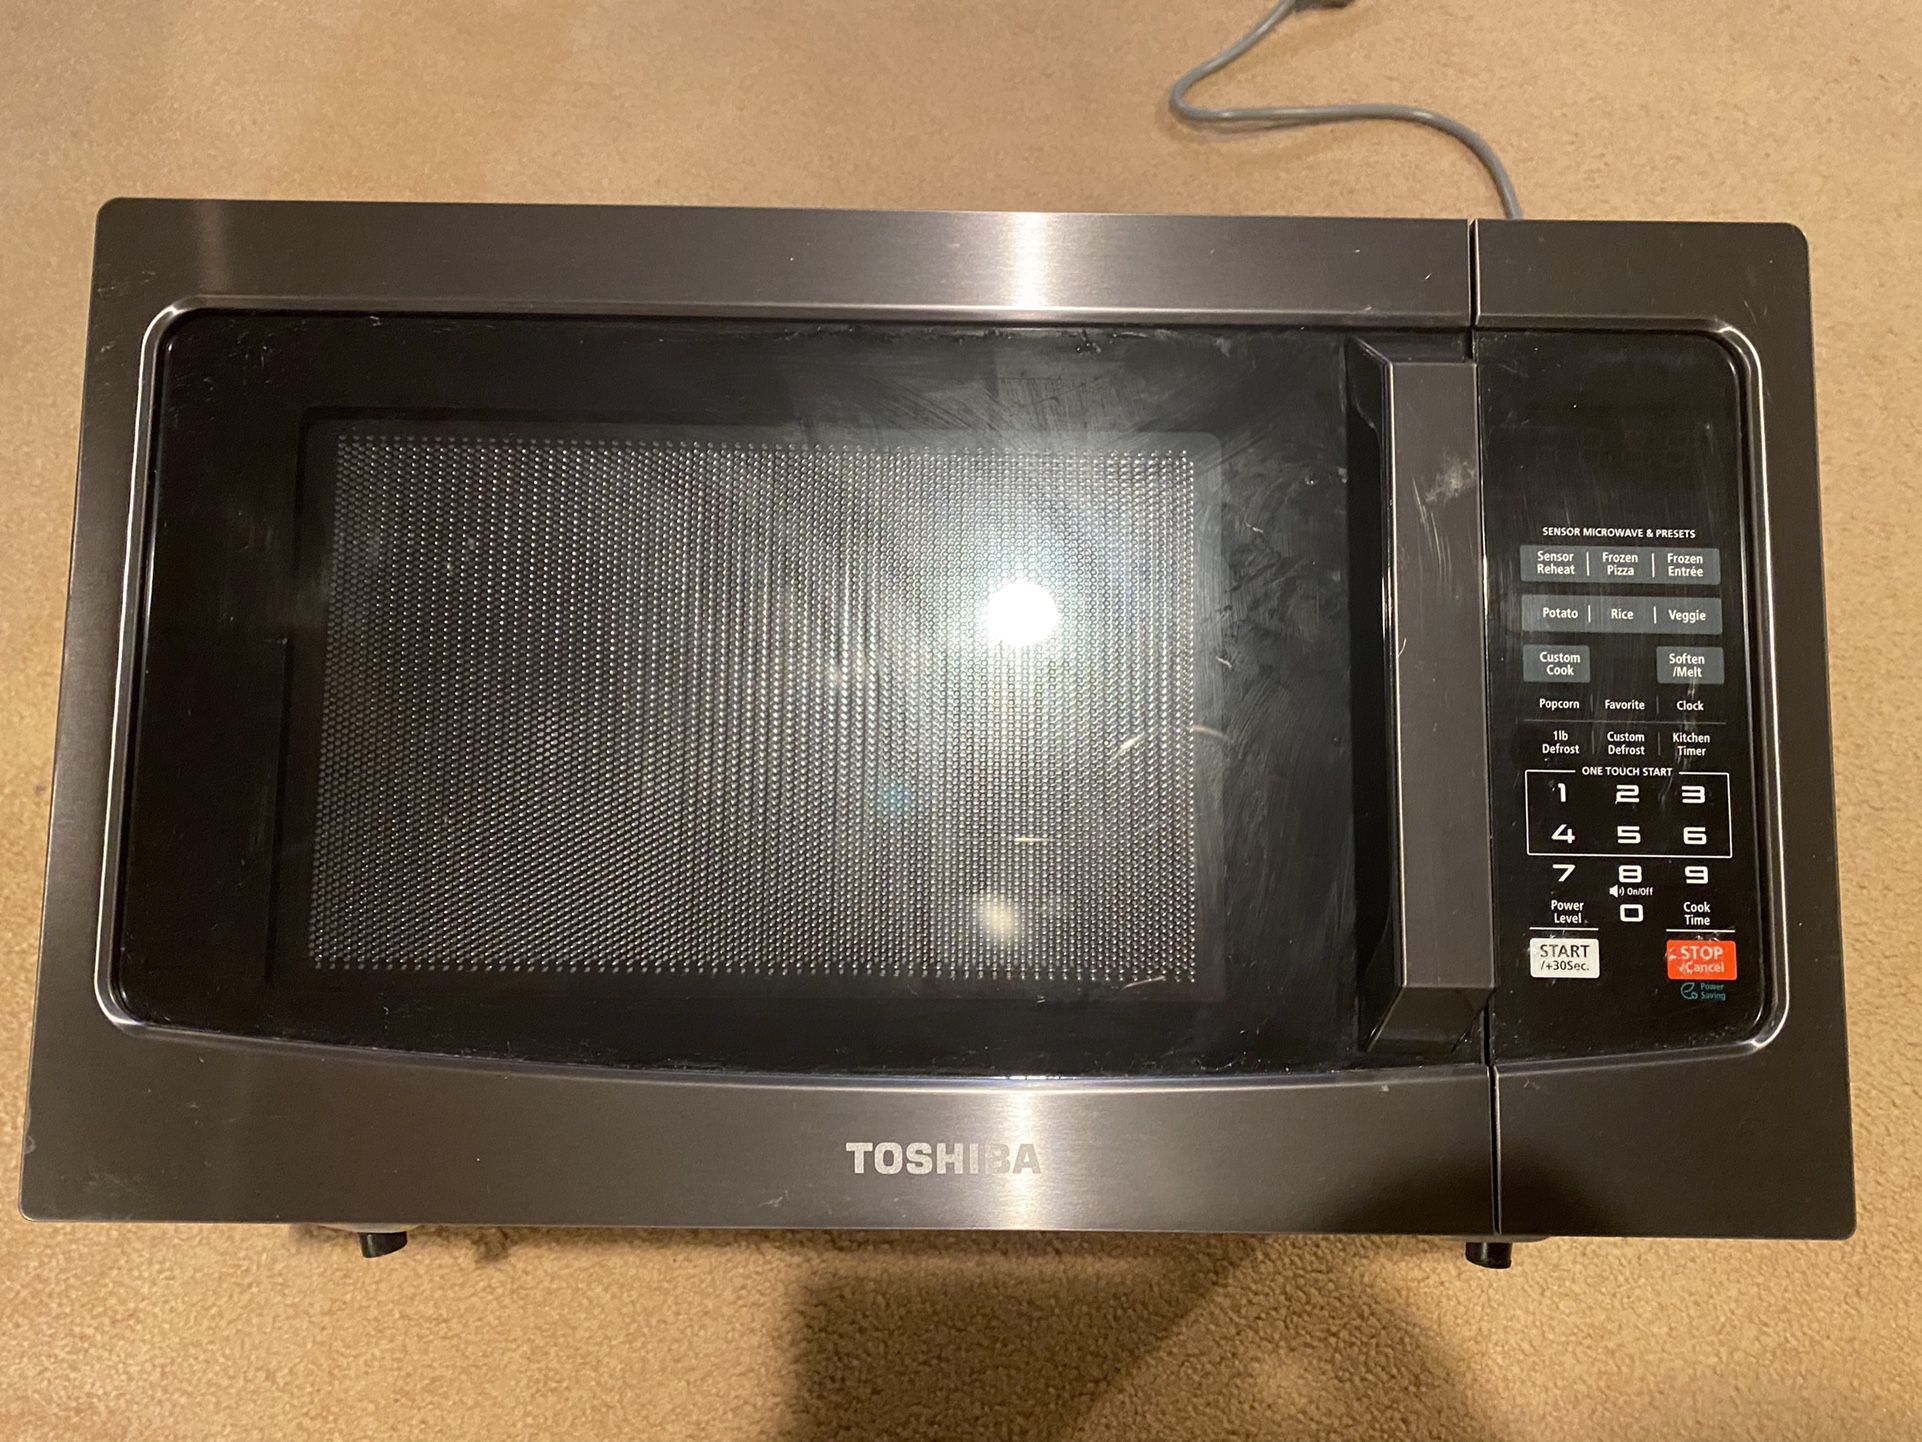 Lightly Used Toshiba Microwave Oven